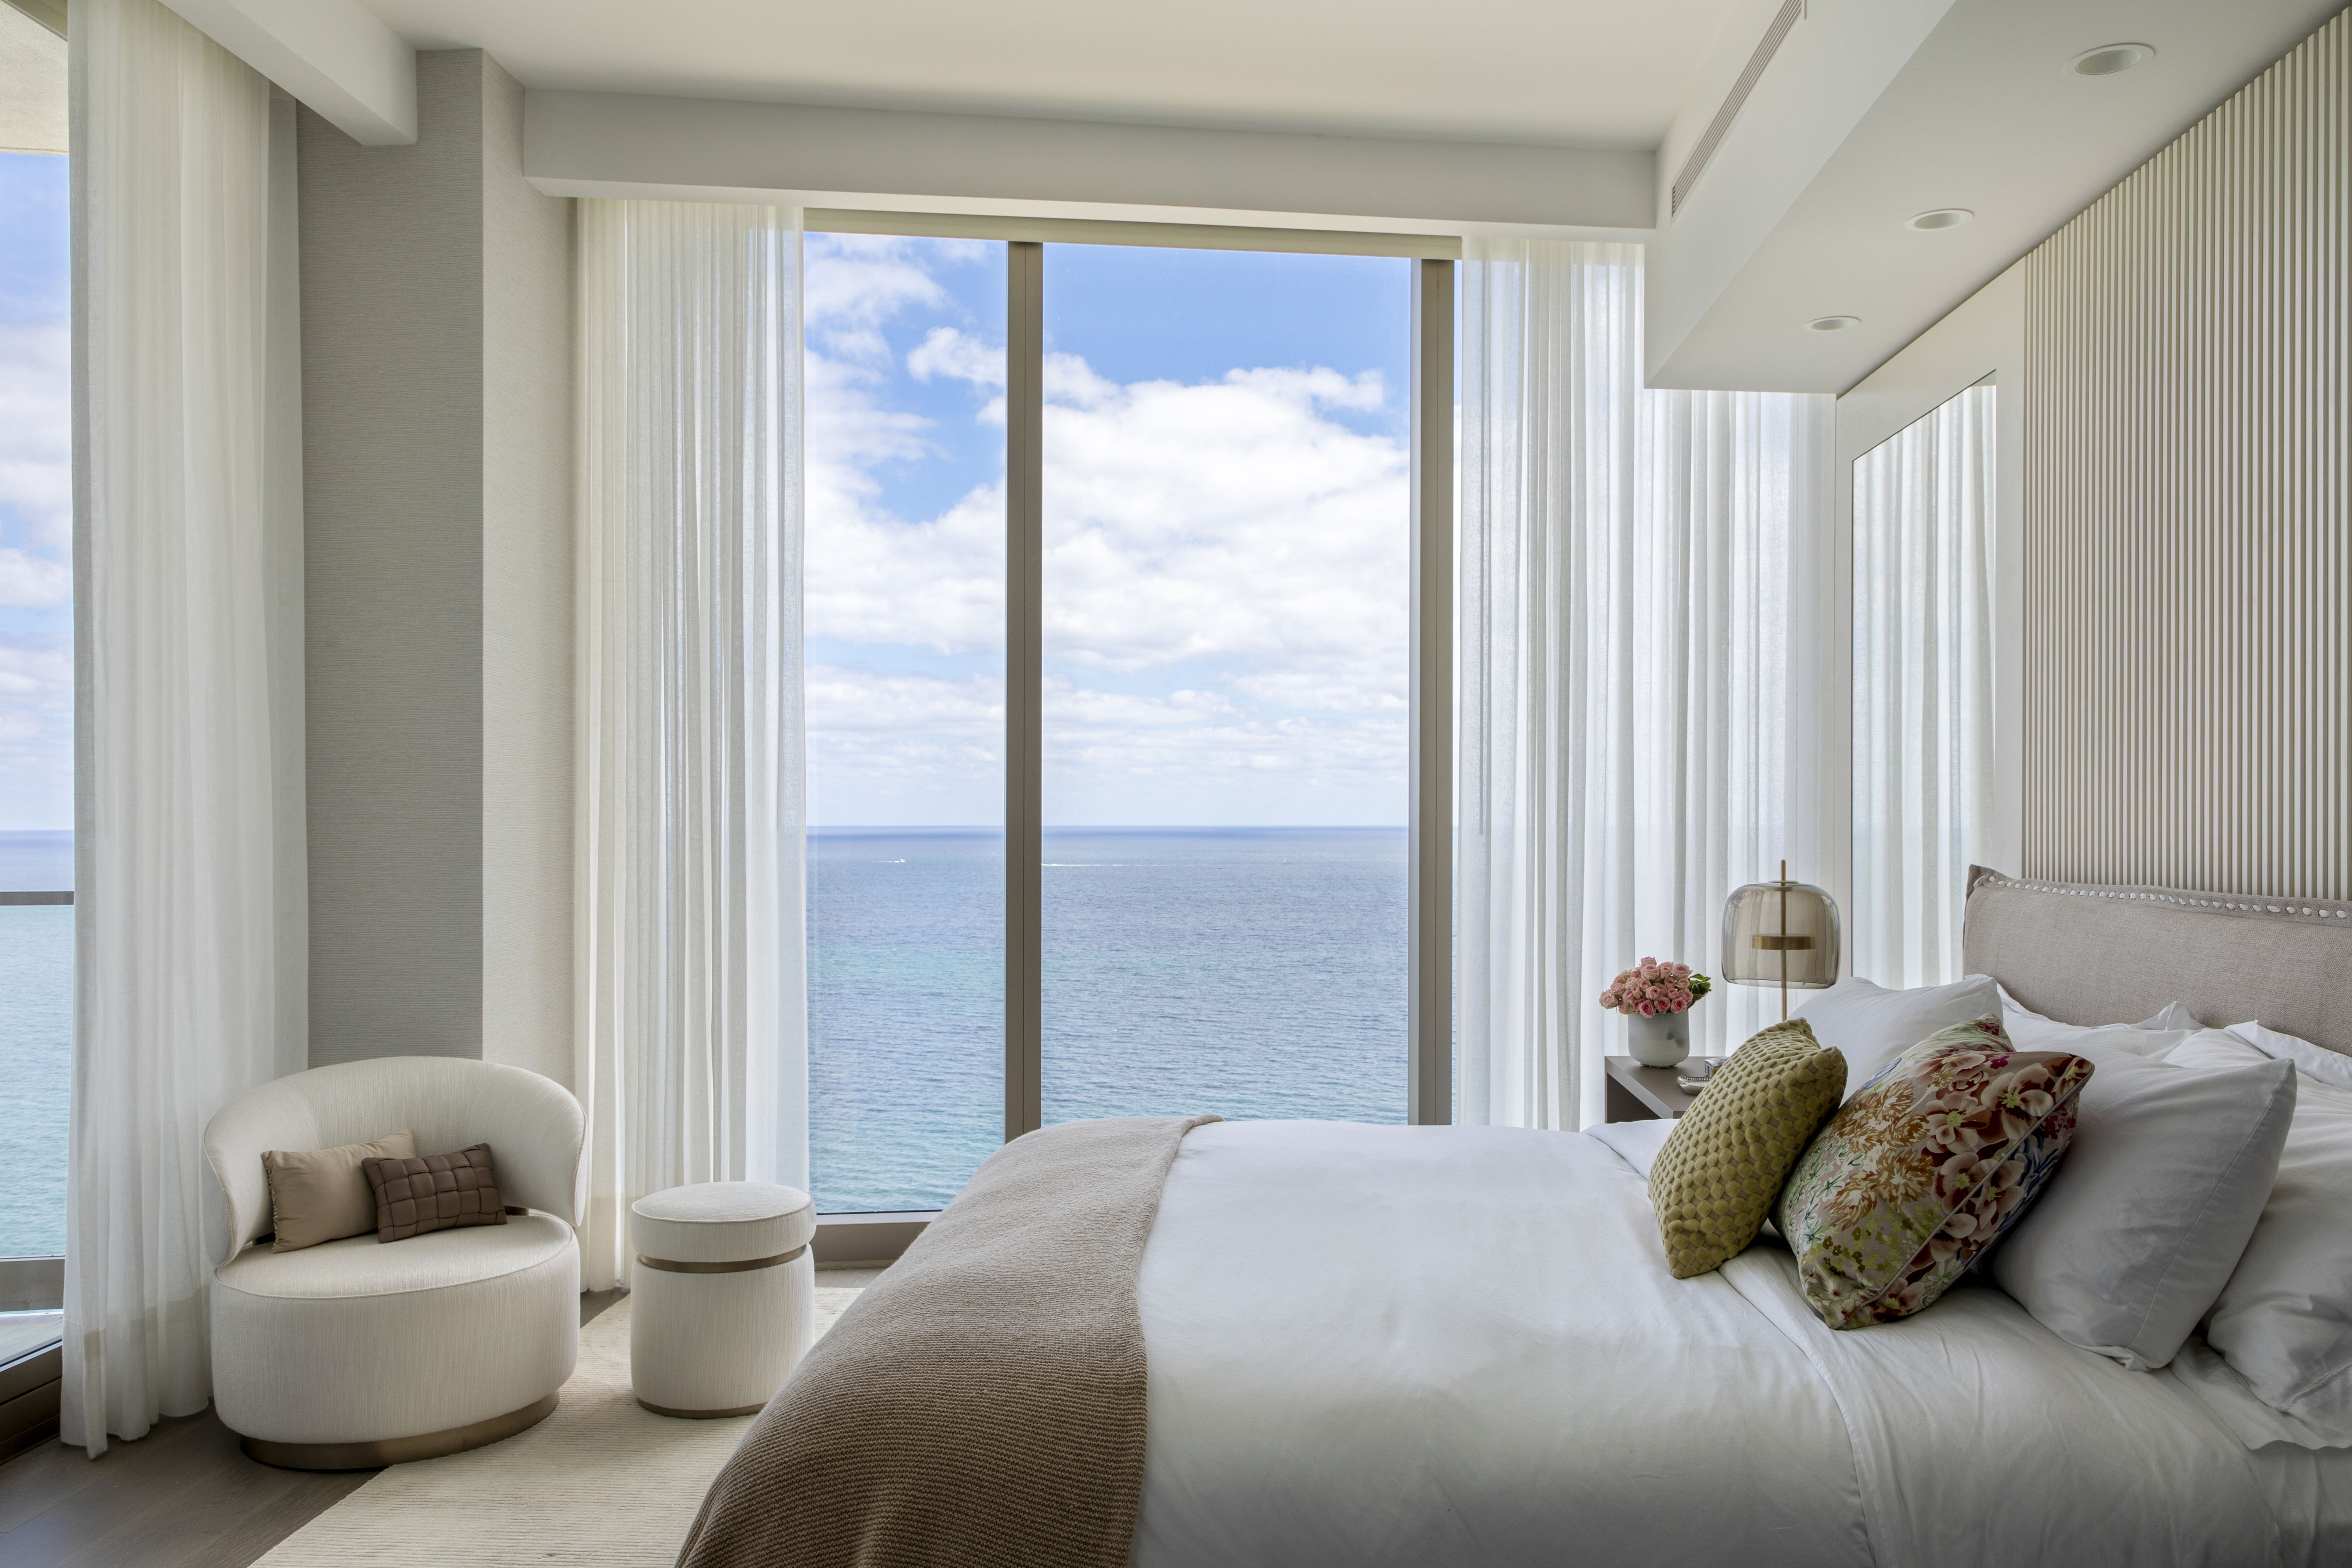 Quarto com vista para o mar, cama de casal, poltrona branca e cortina branca.